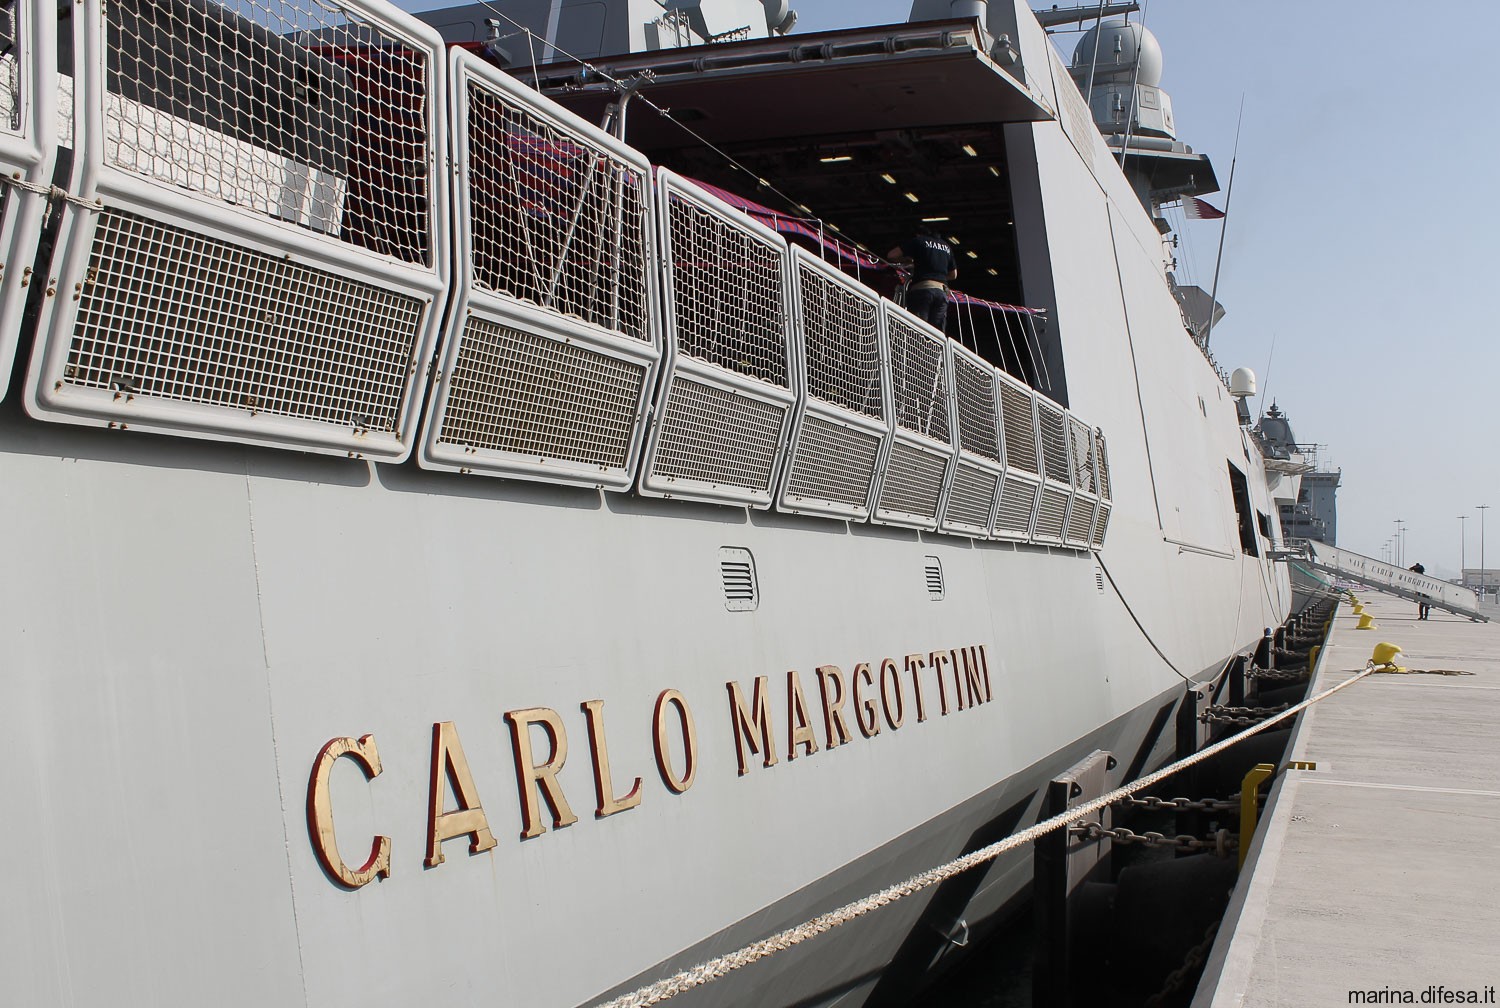 f-592 carlo margottini its nave bergamini fremm class guided missile frigate italian navy marina militare 36